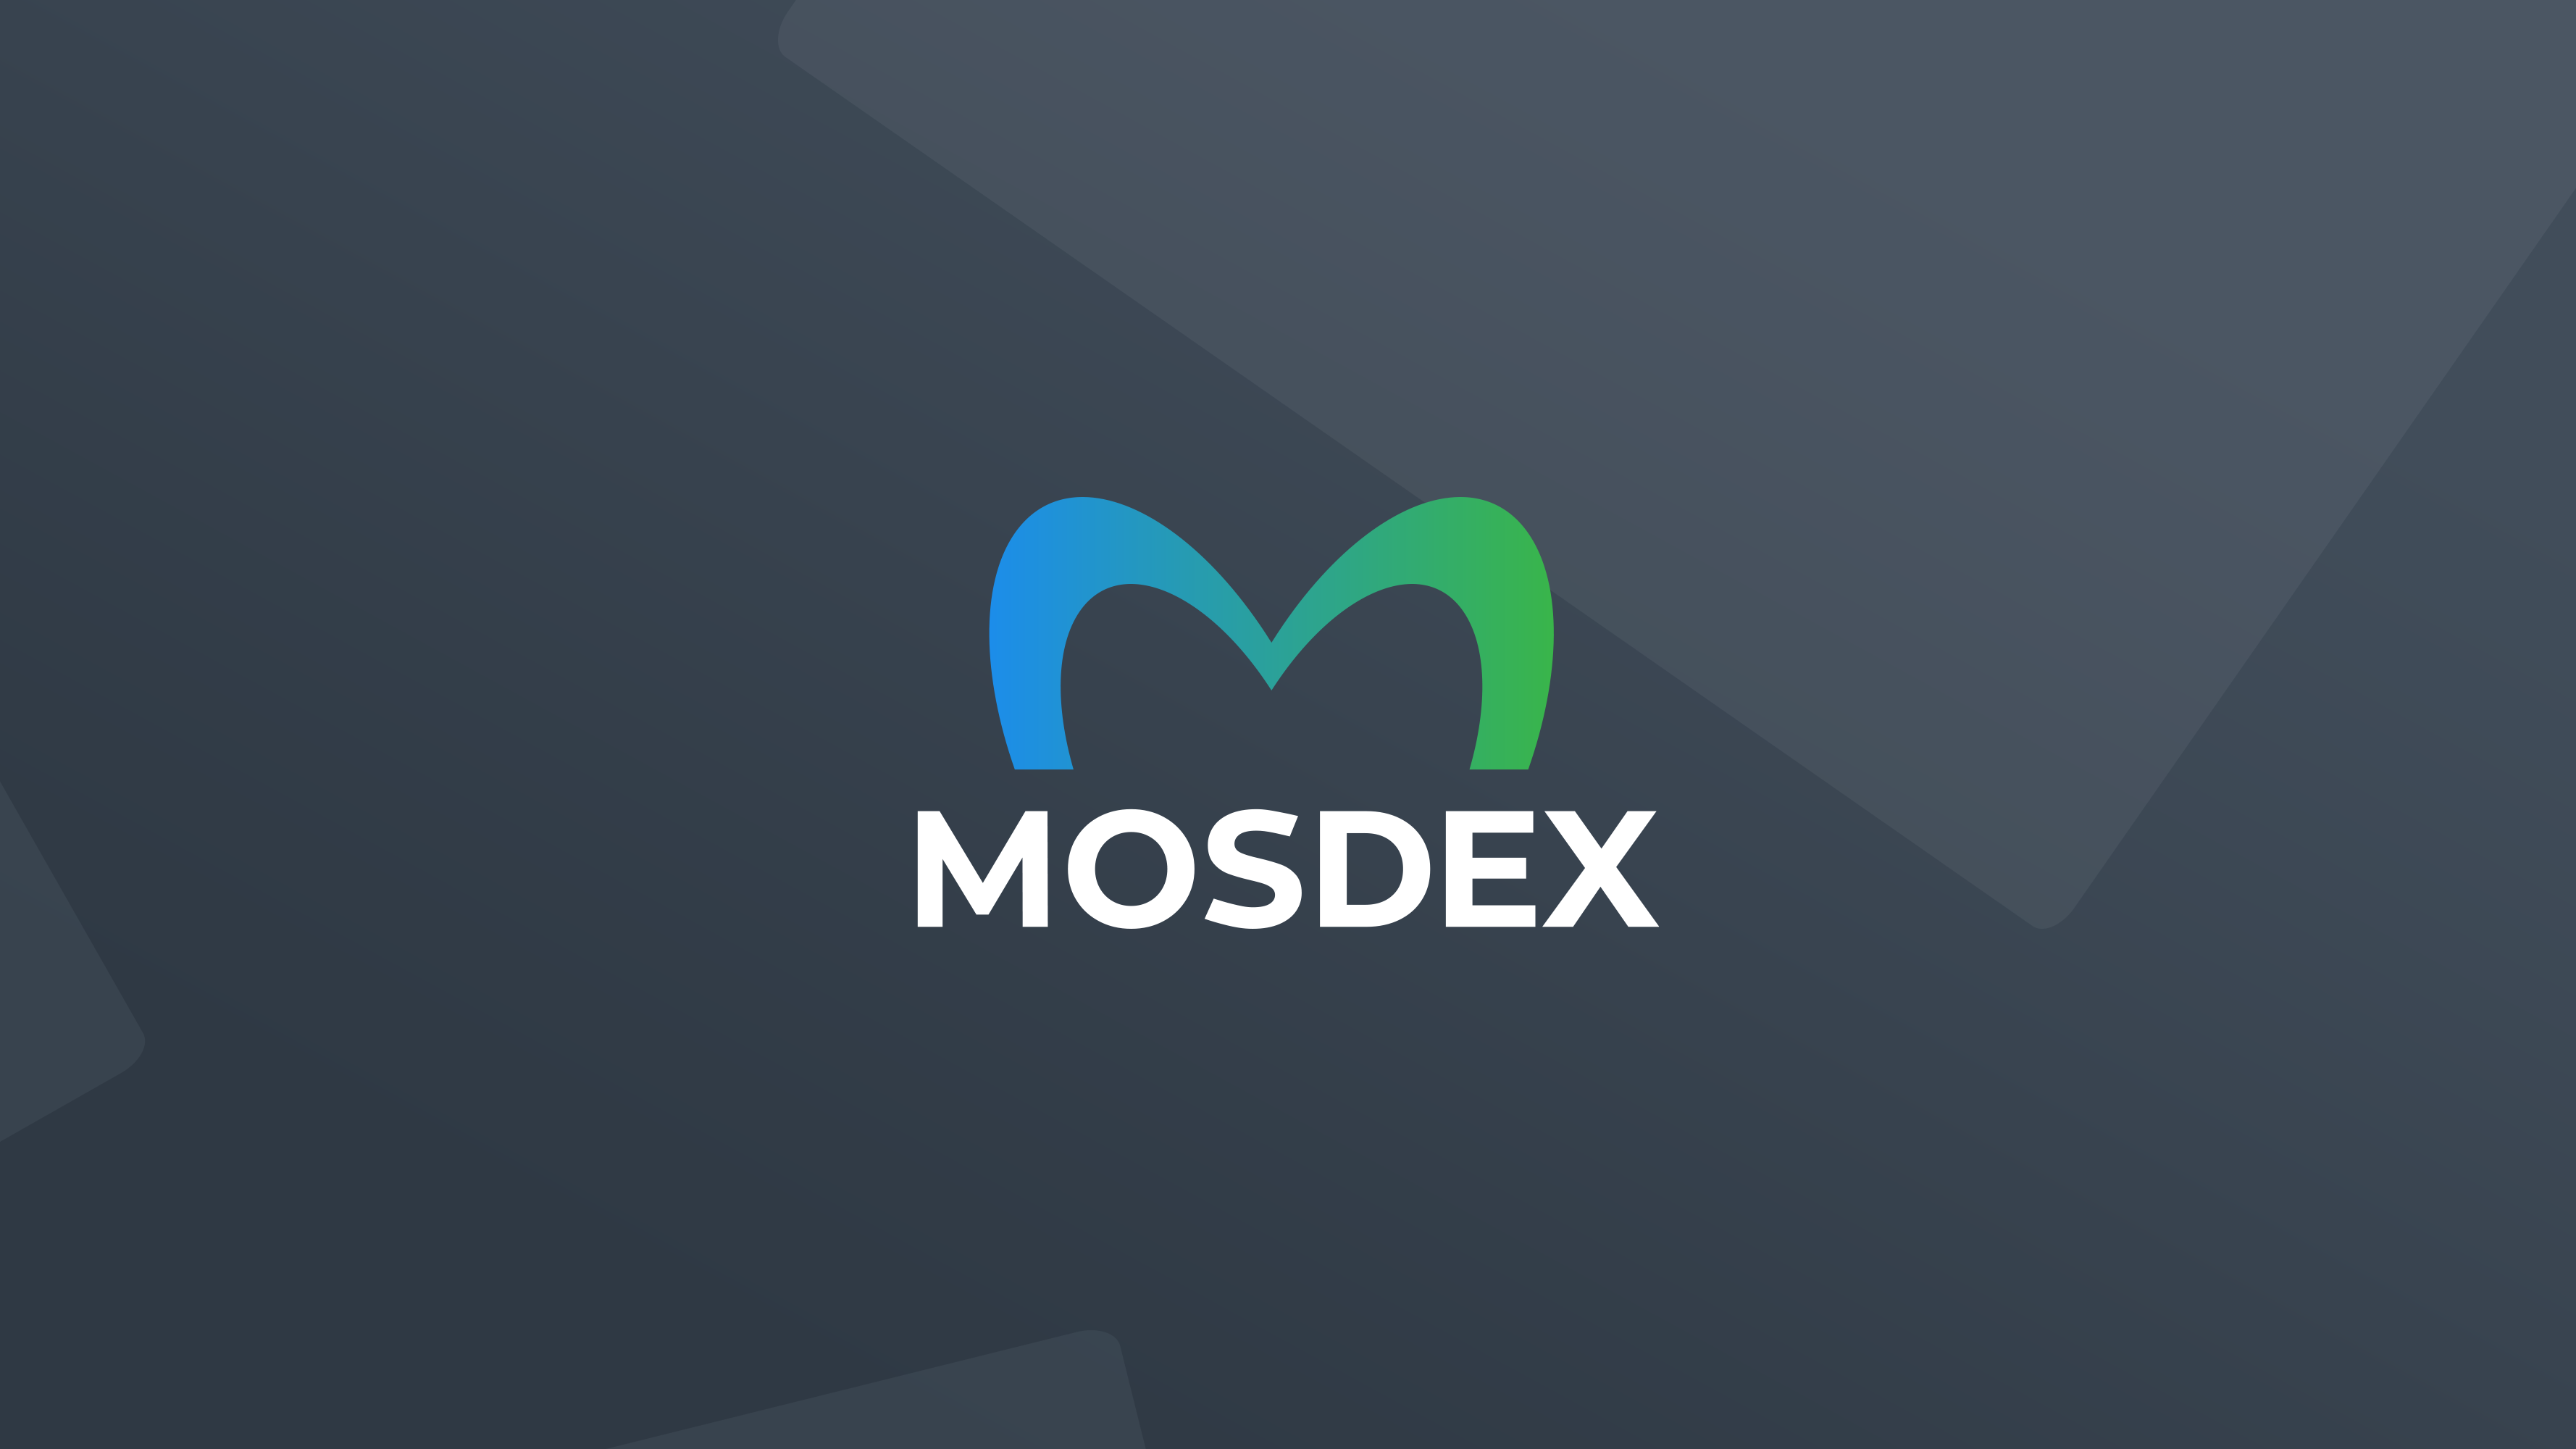 , Mosdex is Now Offering 30 USDT Through its Referral Program